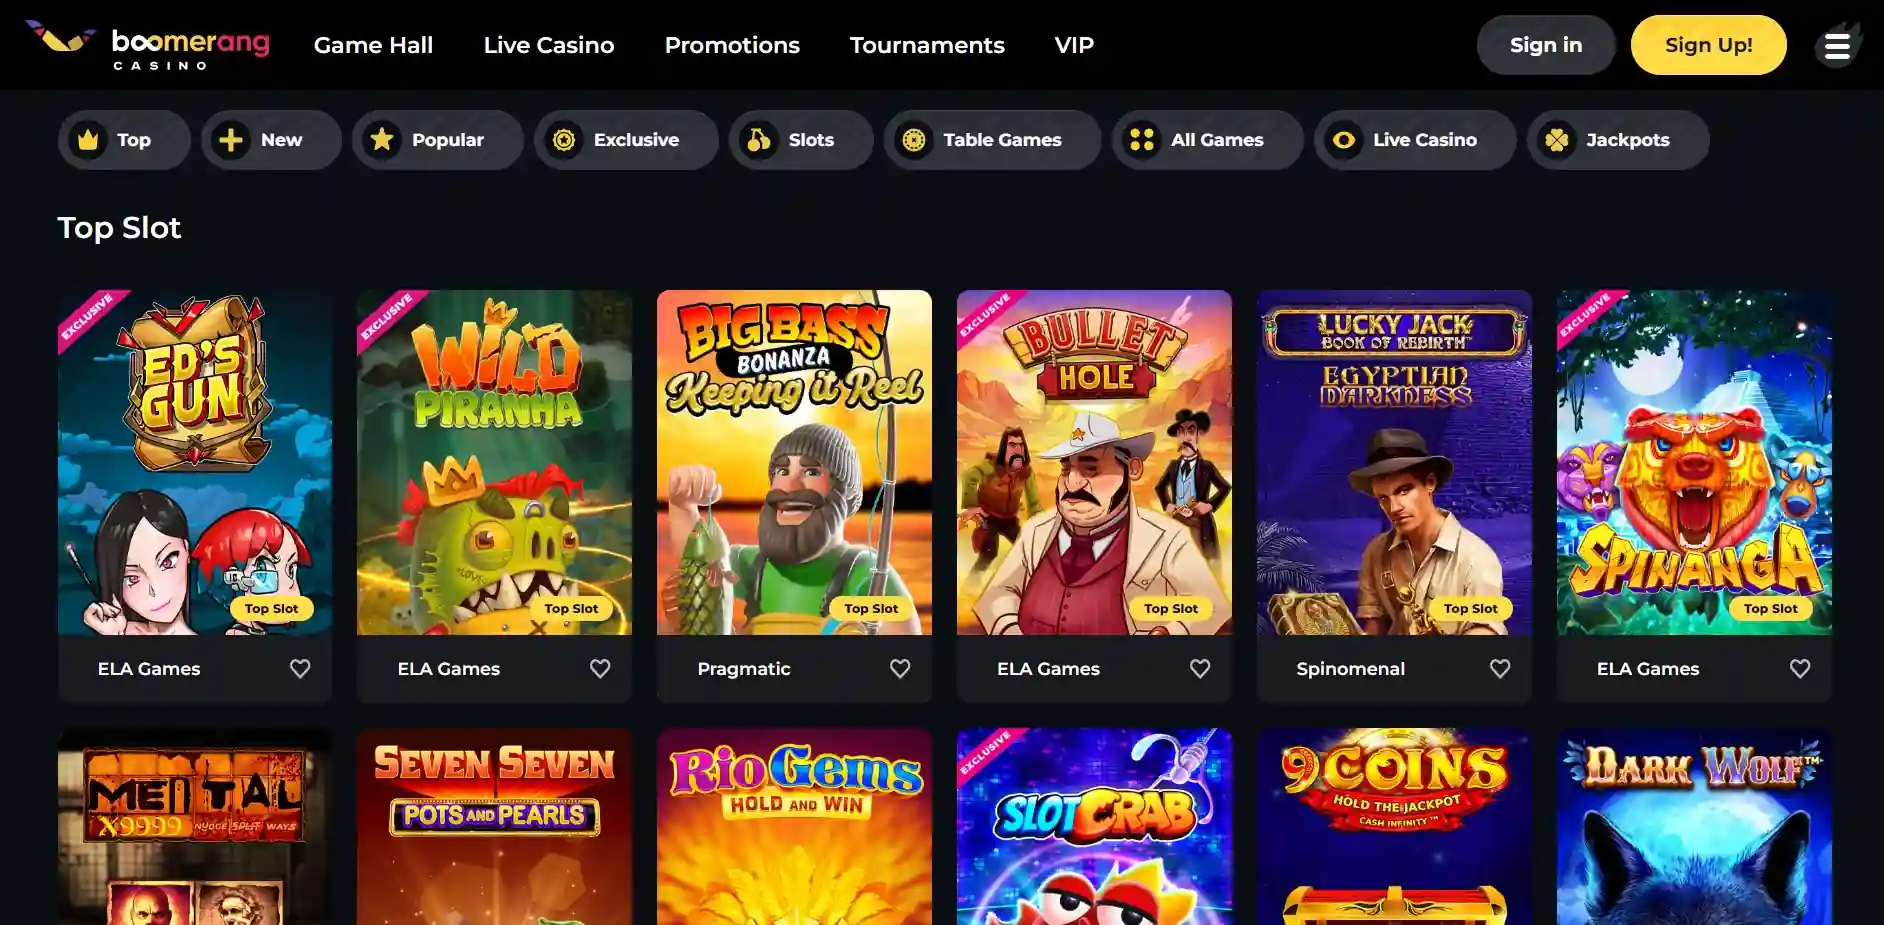 Boomerang casino games